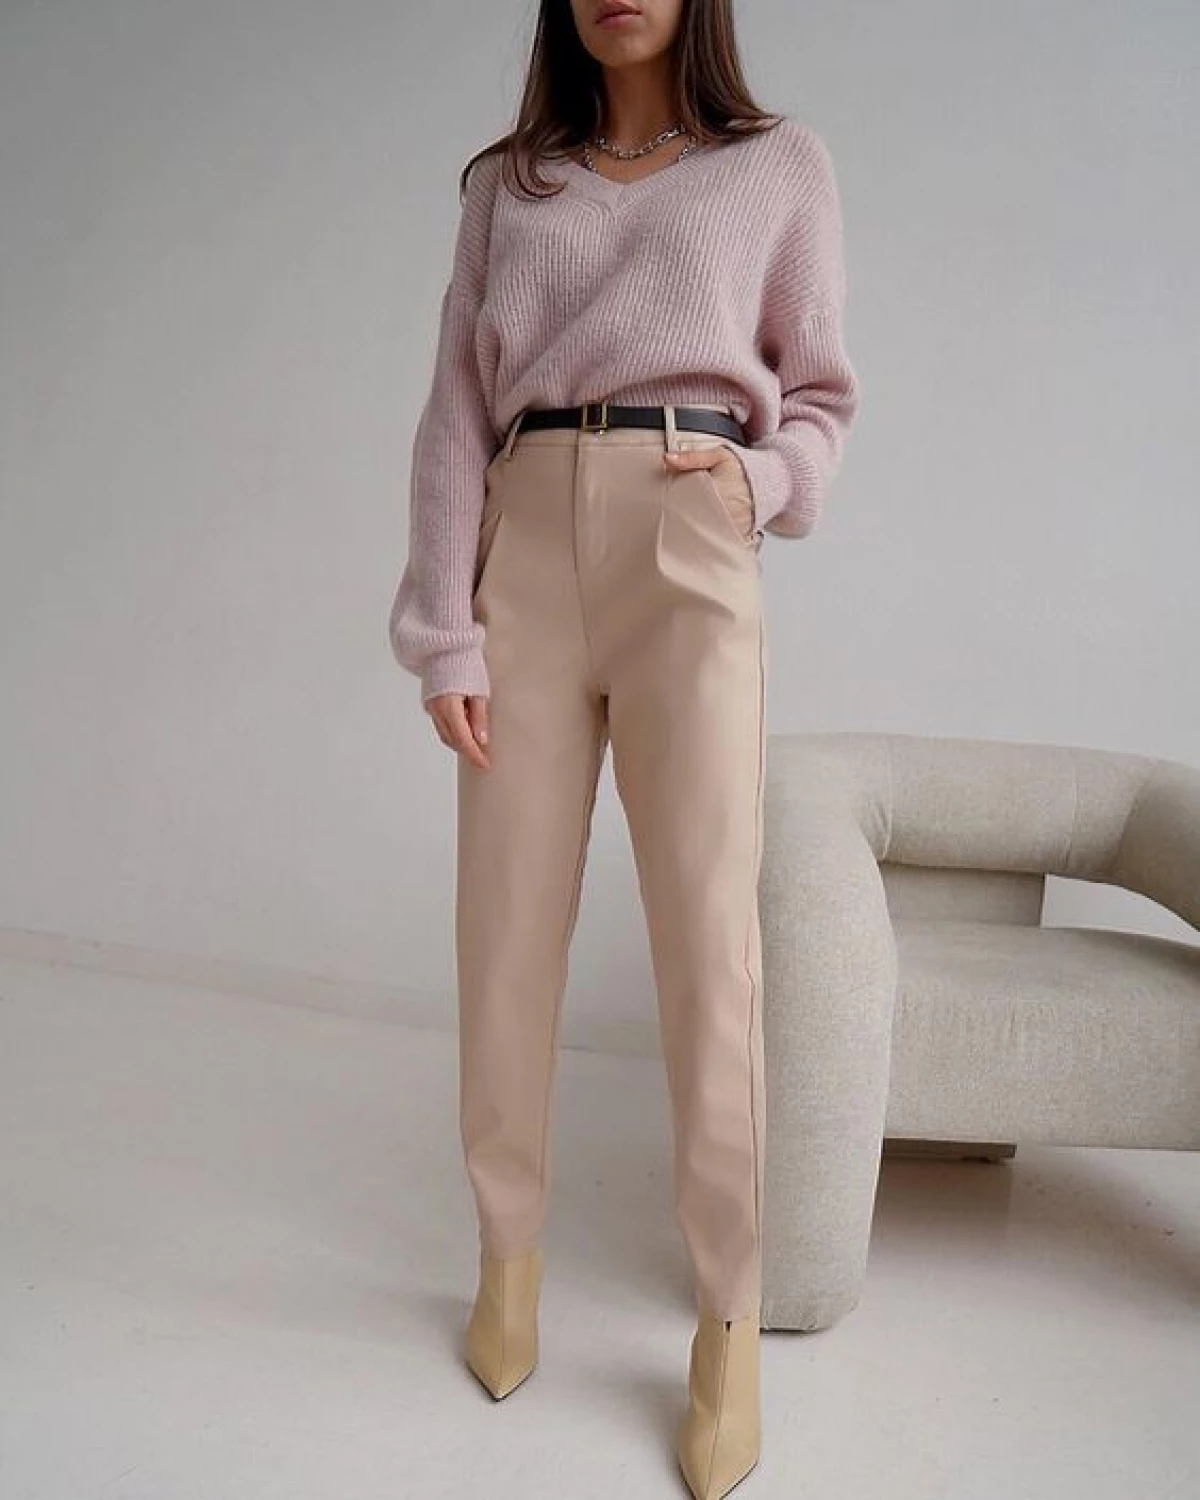 Модни зимни панталони 2021: Стилни модели за безупречно изображение 15609_11